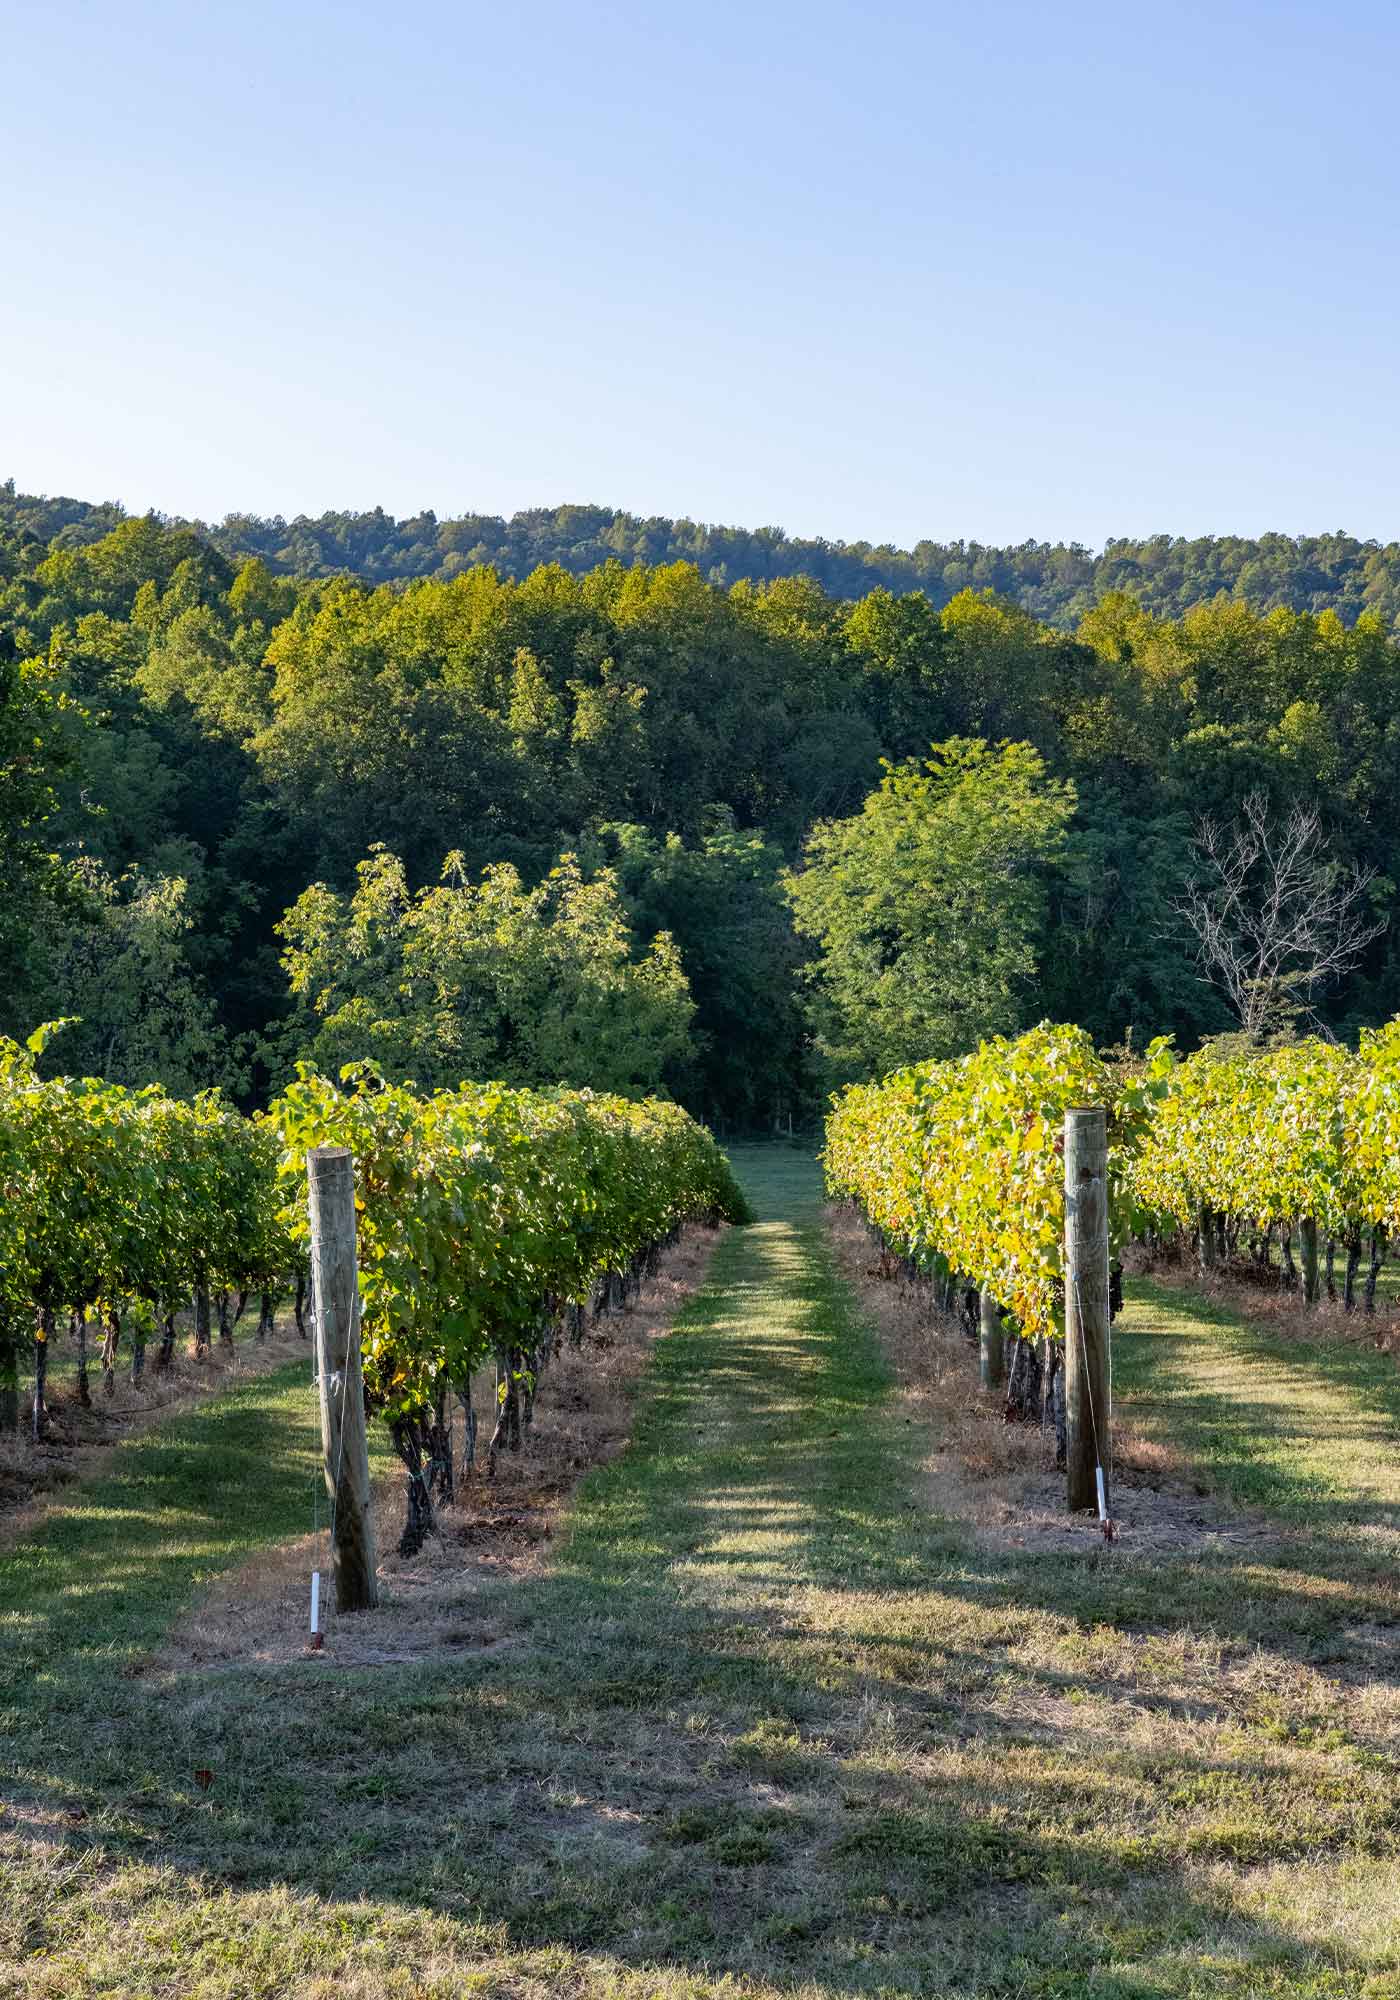 Southwest Mountains Vineyards, Keswick, VA. Near Charlottesville VA. View of vines ready to harvest.